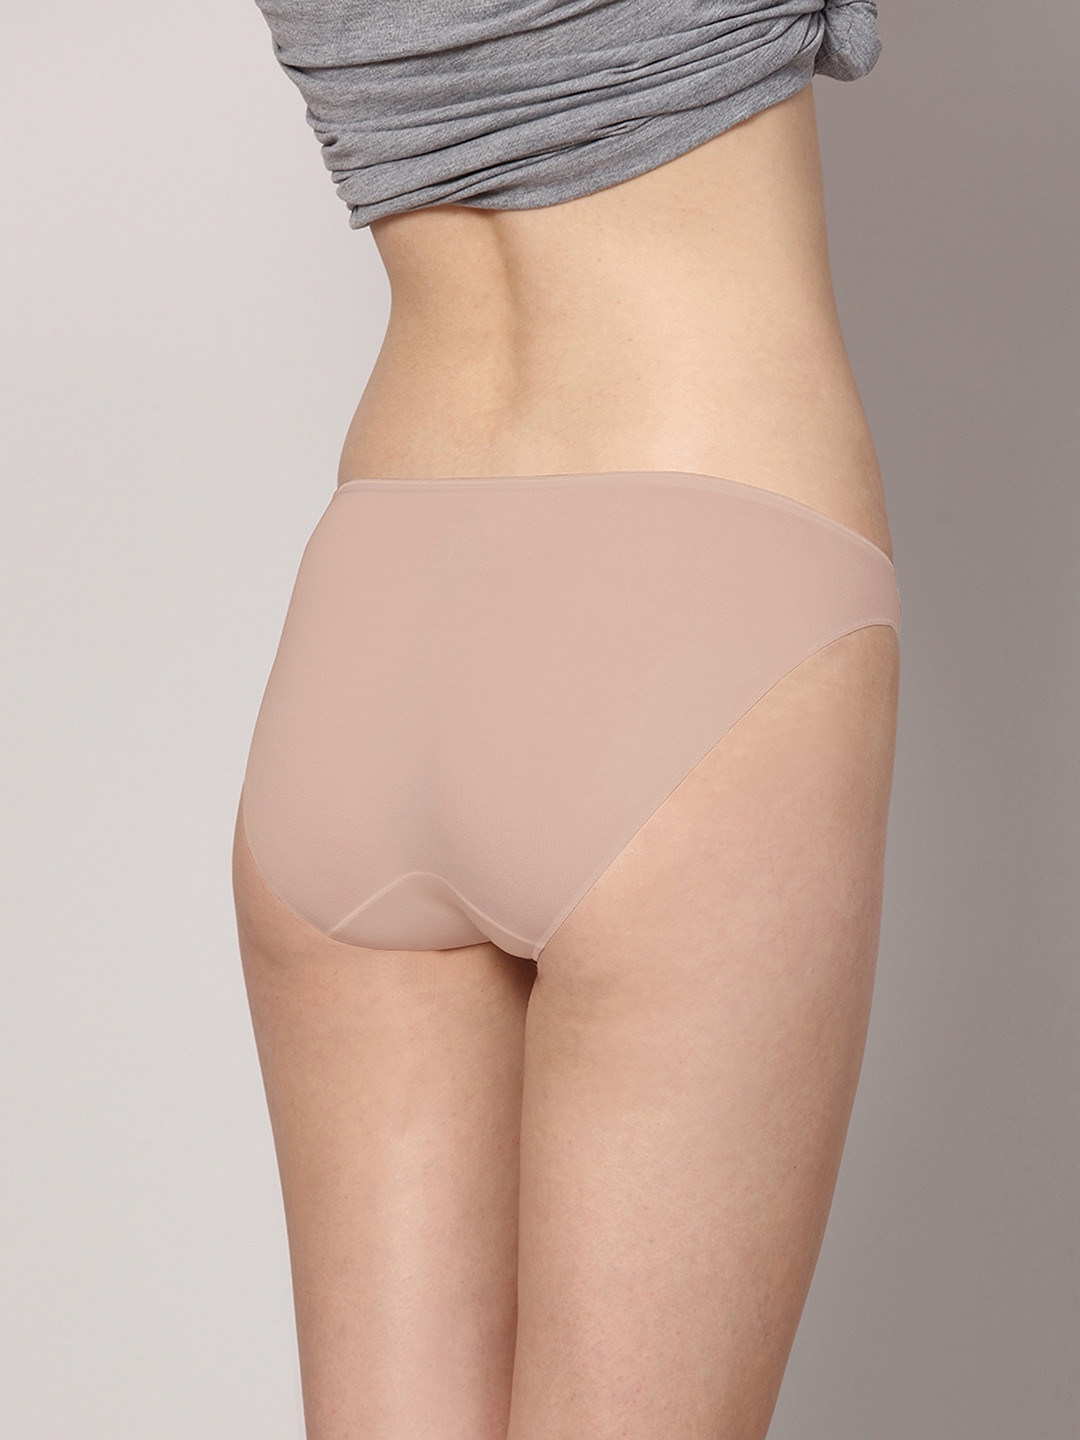 AshleyandAlvis | AshleyandAlvis Women's Panties Micro Modal, Anti Bacterial, Skinny Soft, Premium Bikini-No Itching, Sweat Proof, Double In-seam Gusset 4